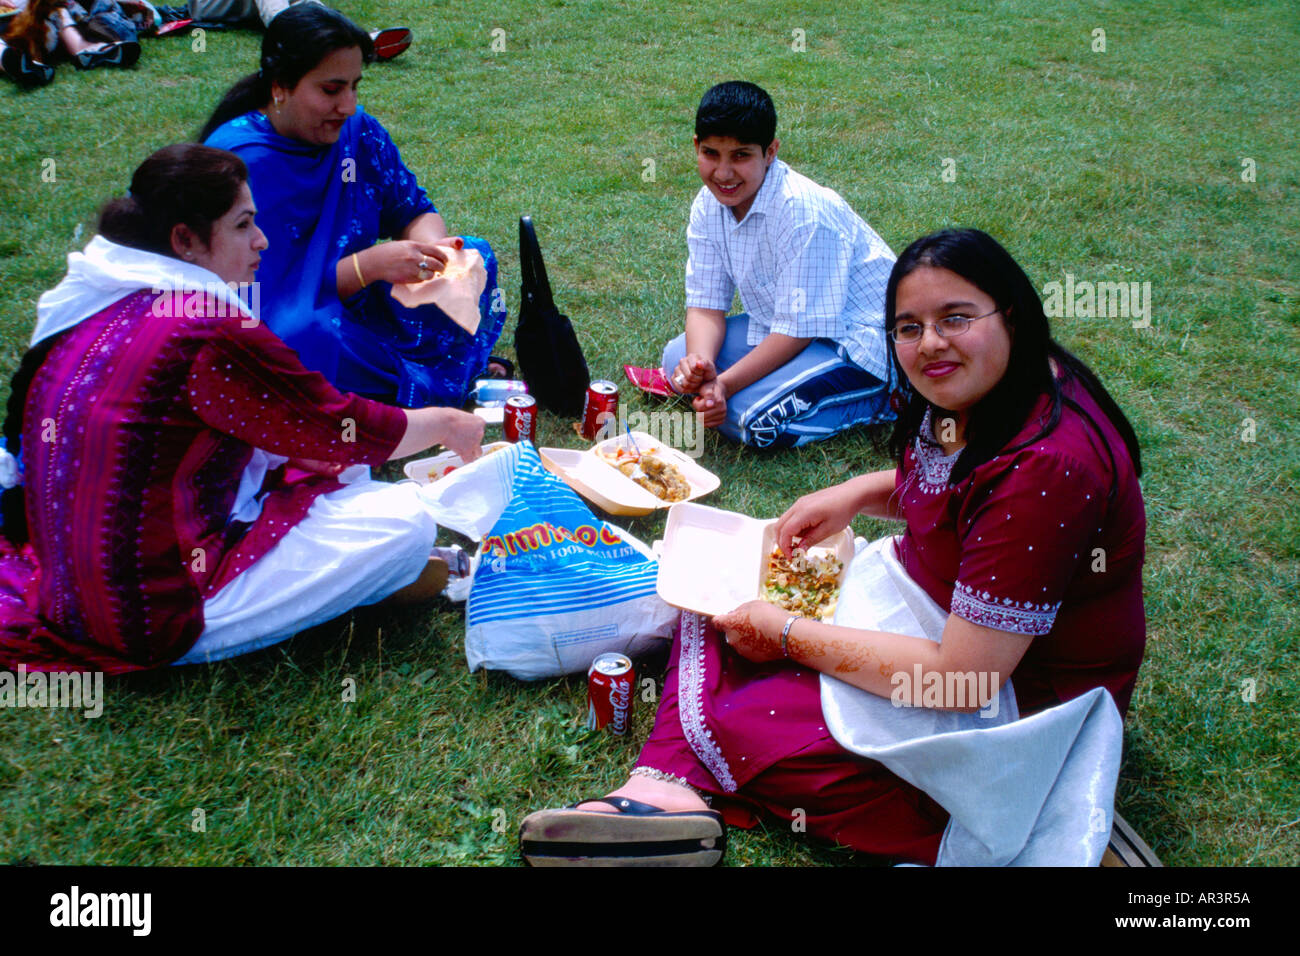 Eid Mela - Eid feiern mit Familie Picknick in Birmingham England Stockfoto